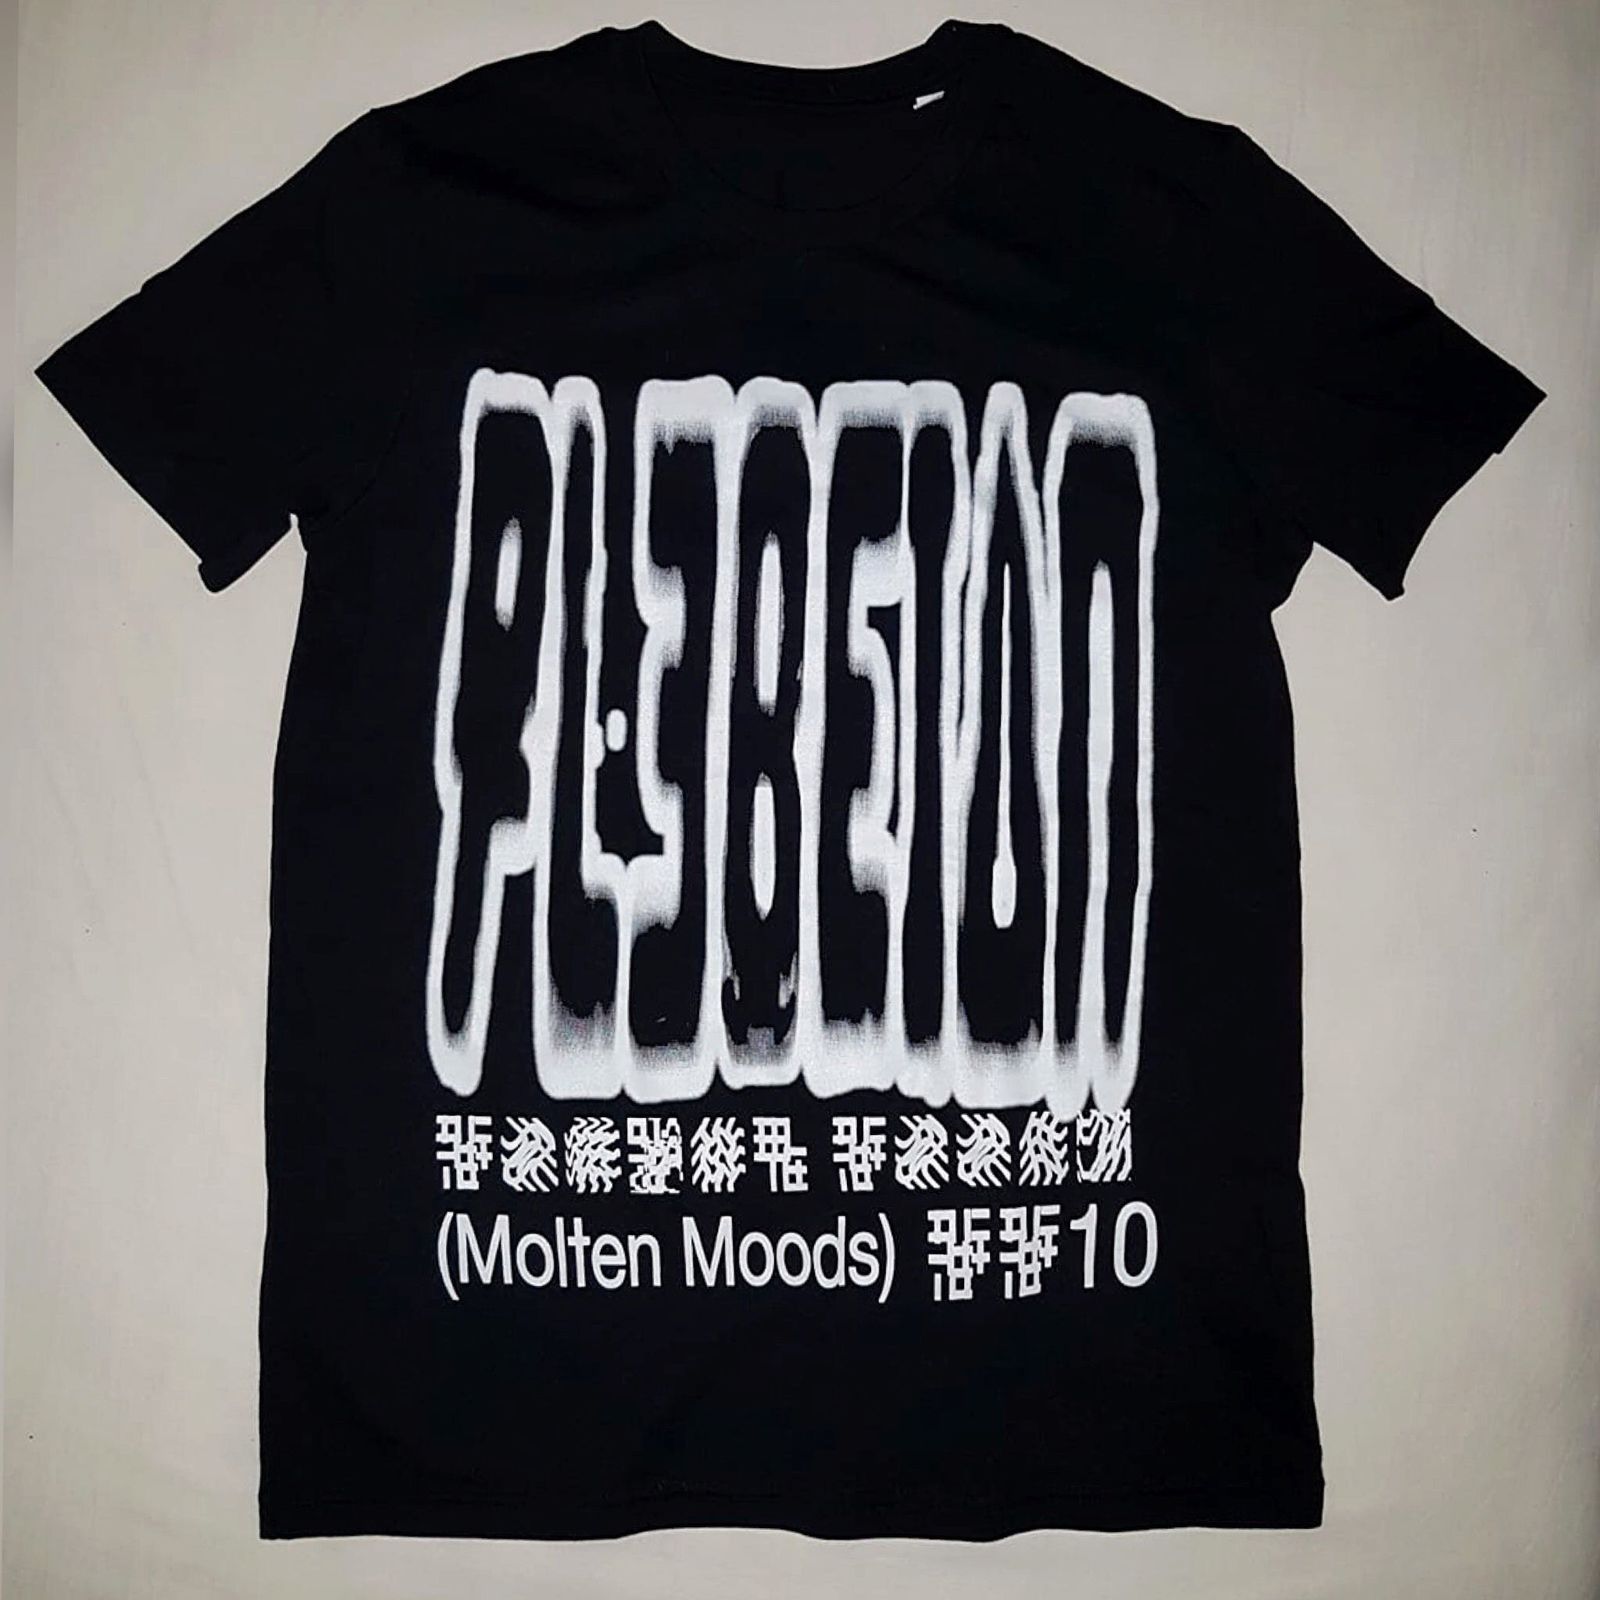 Plebeian - Chess (T-Shirt + Download Code)